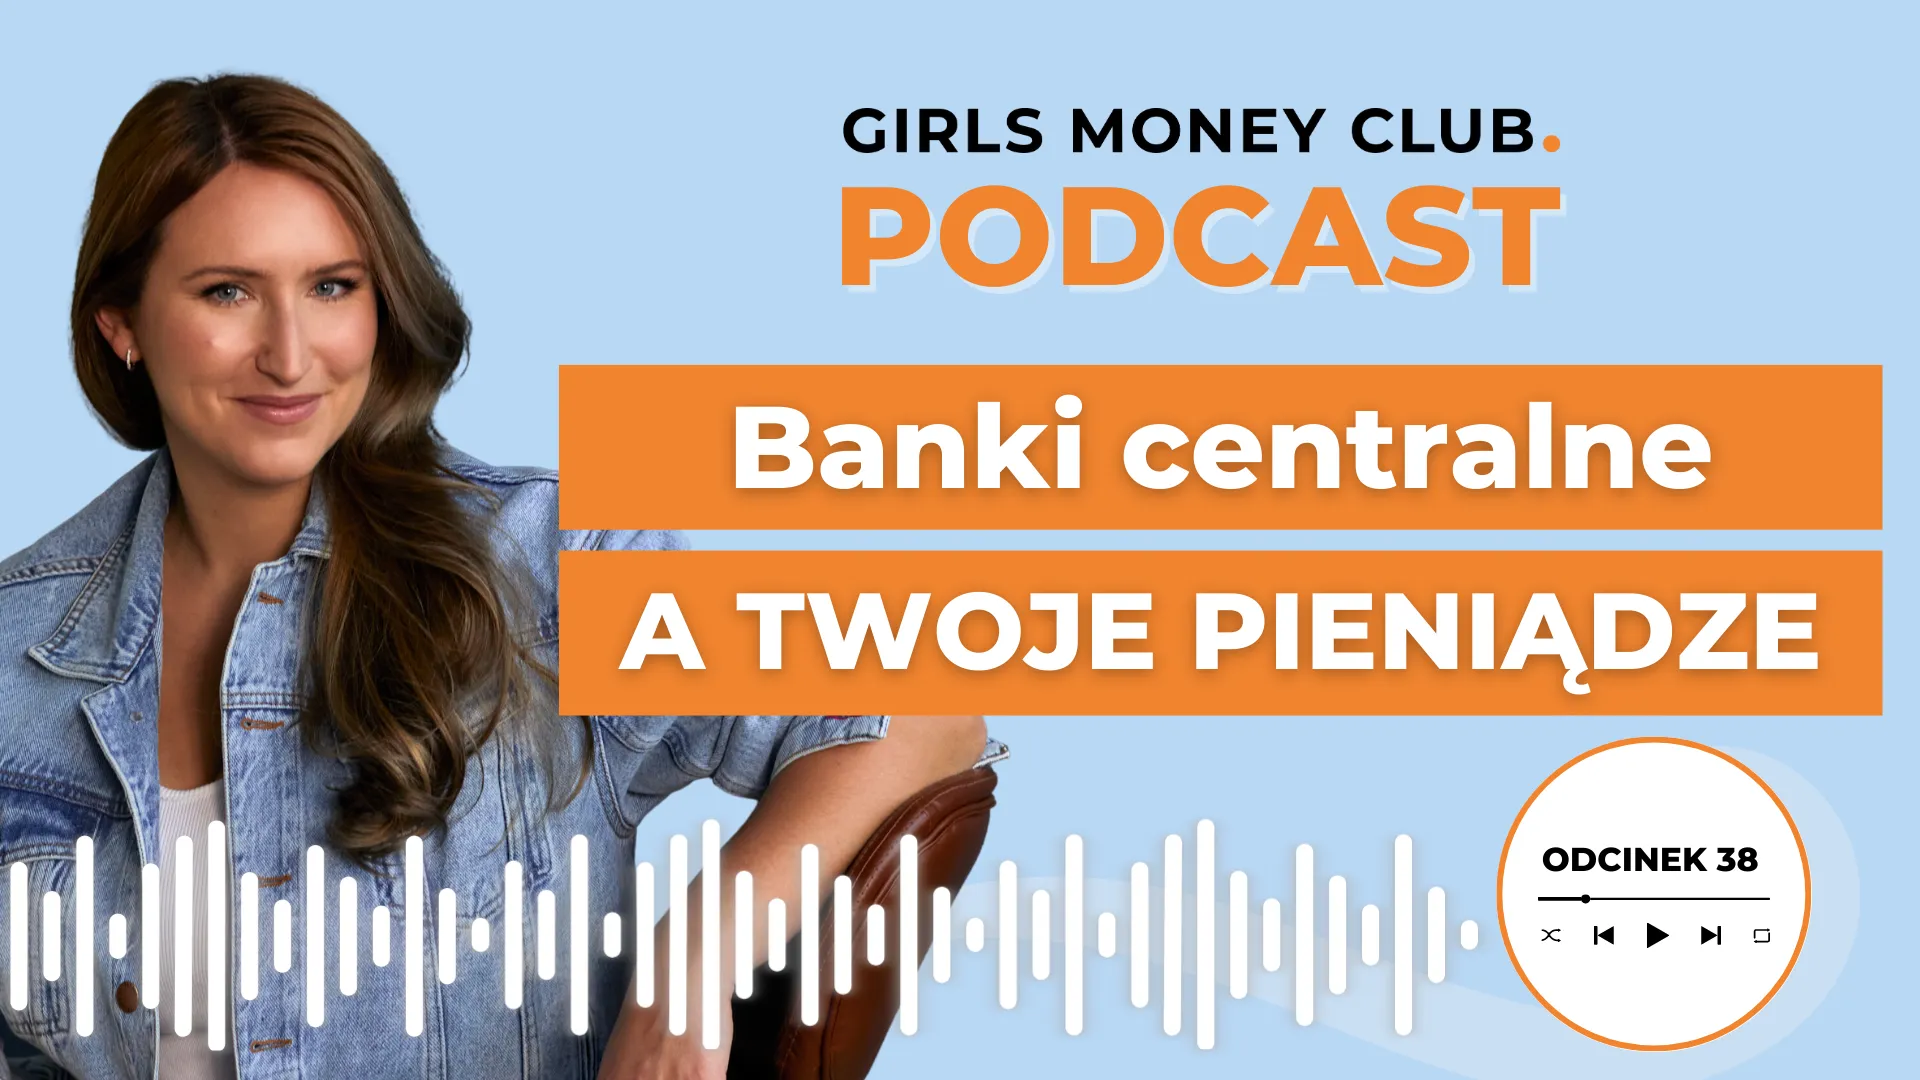 Banki centralne | Podcast | Girls Money Club